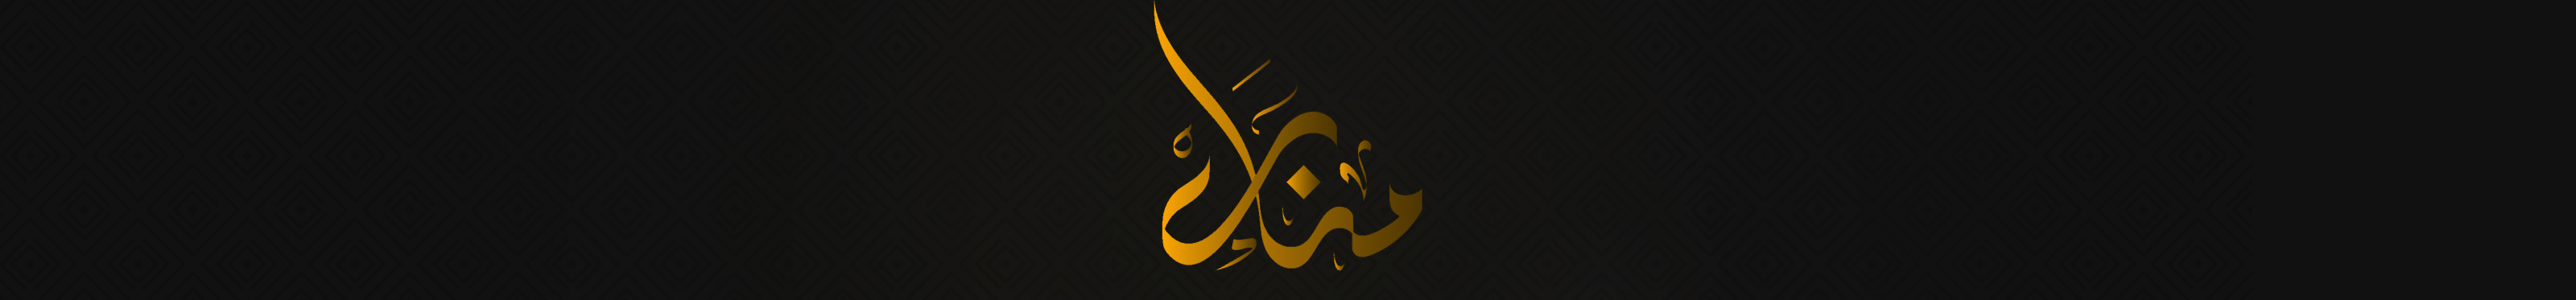 Manar Ahmed's profile banner